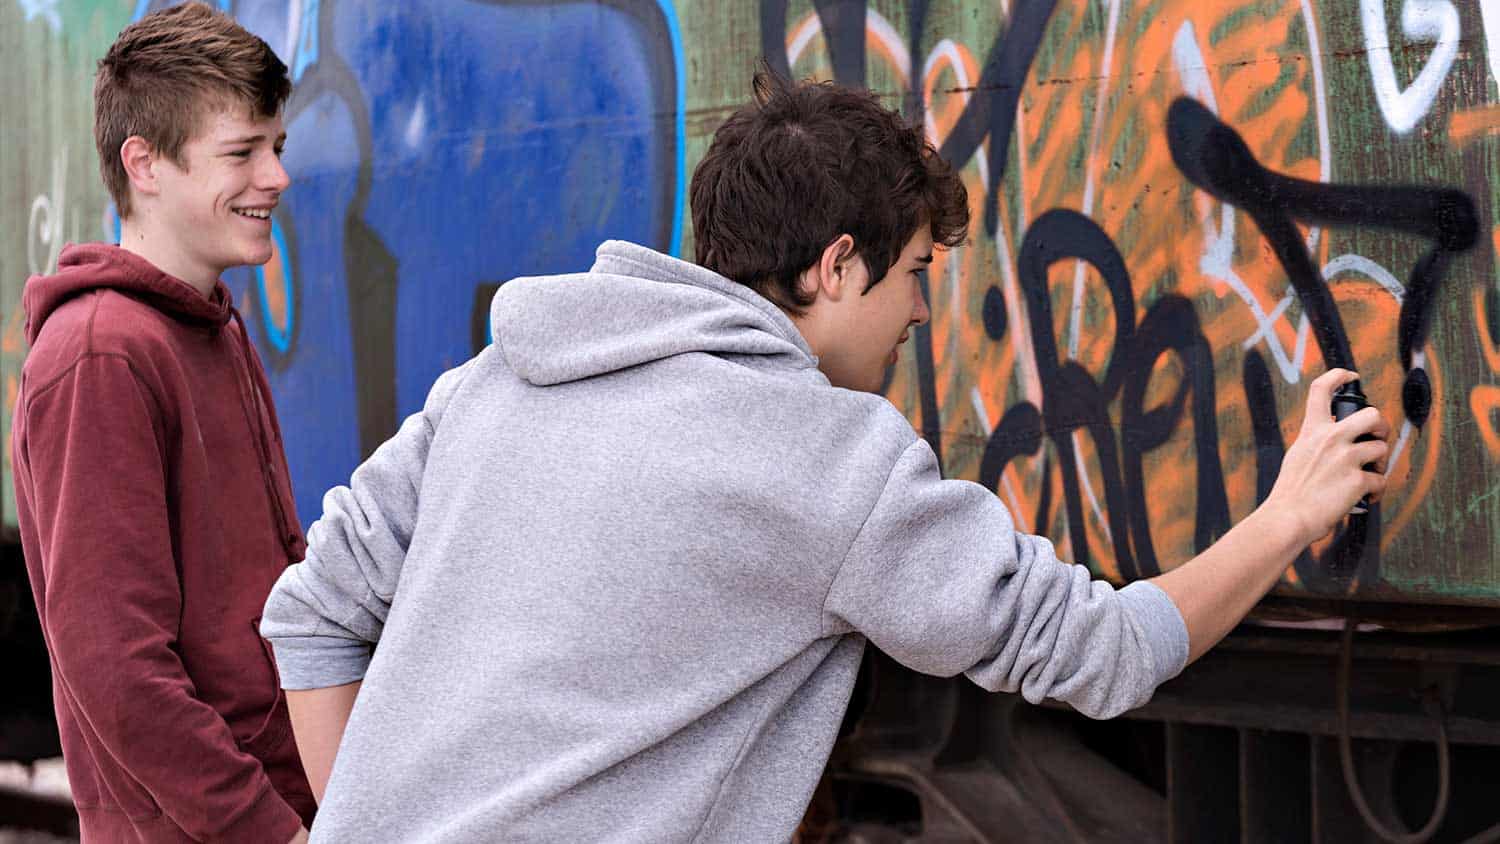 Two teenage boys practicing graffiti